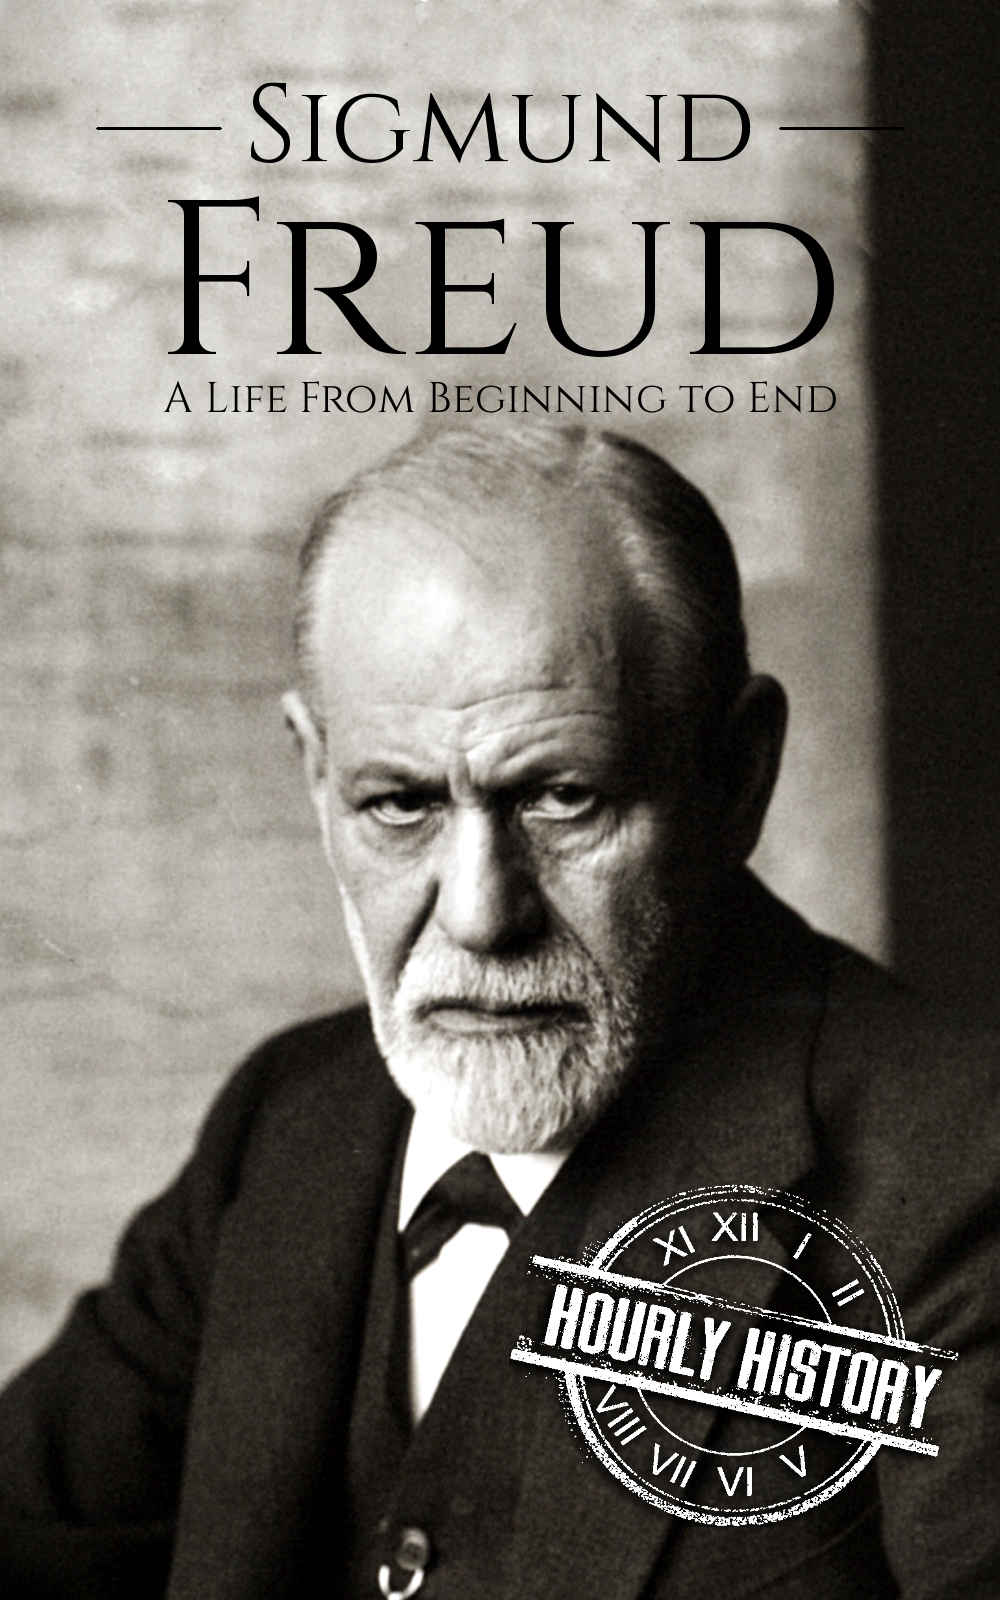 Book cover for Sigmund Freud